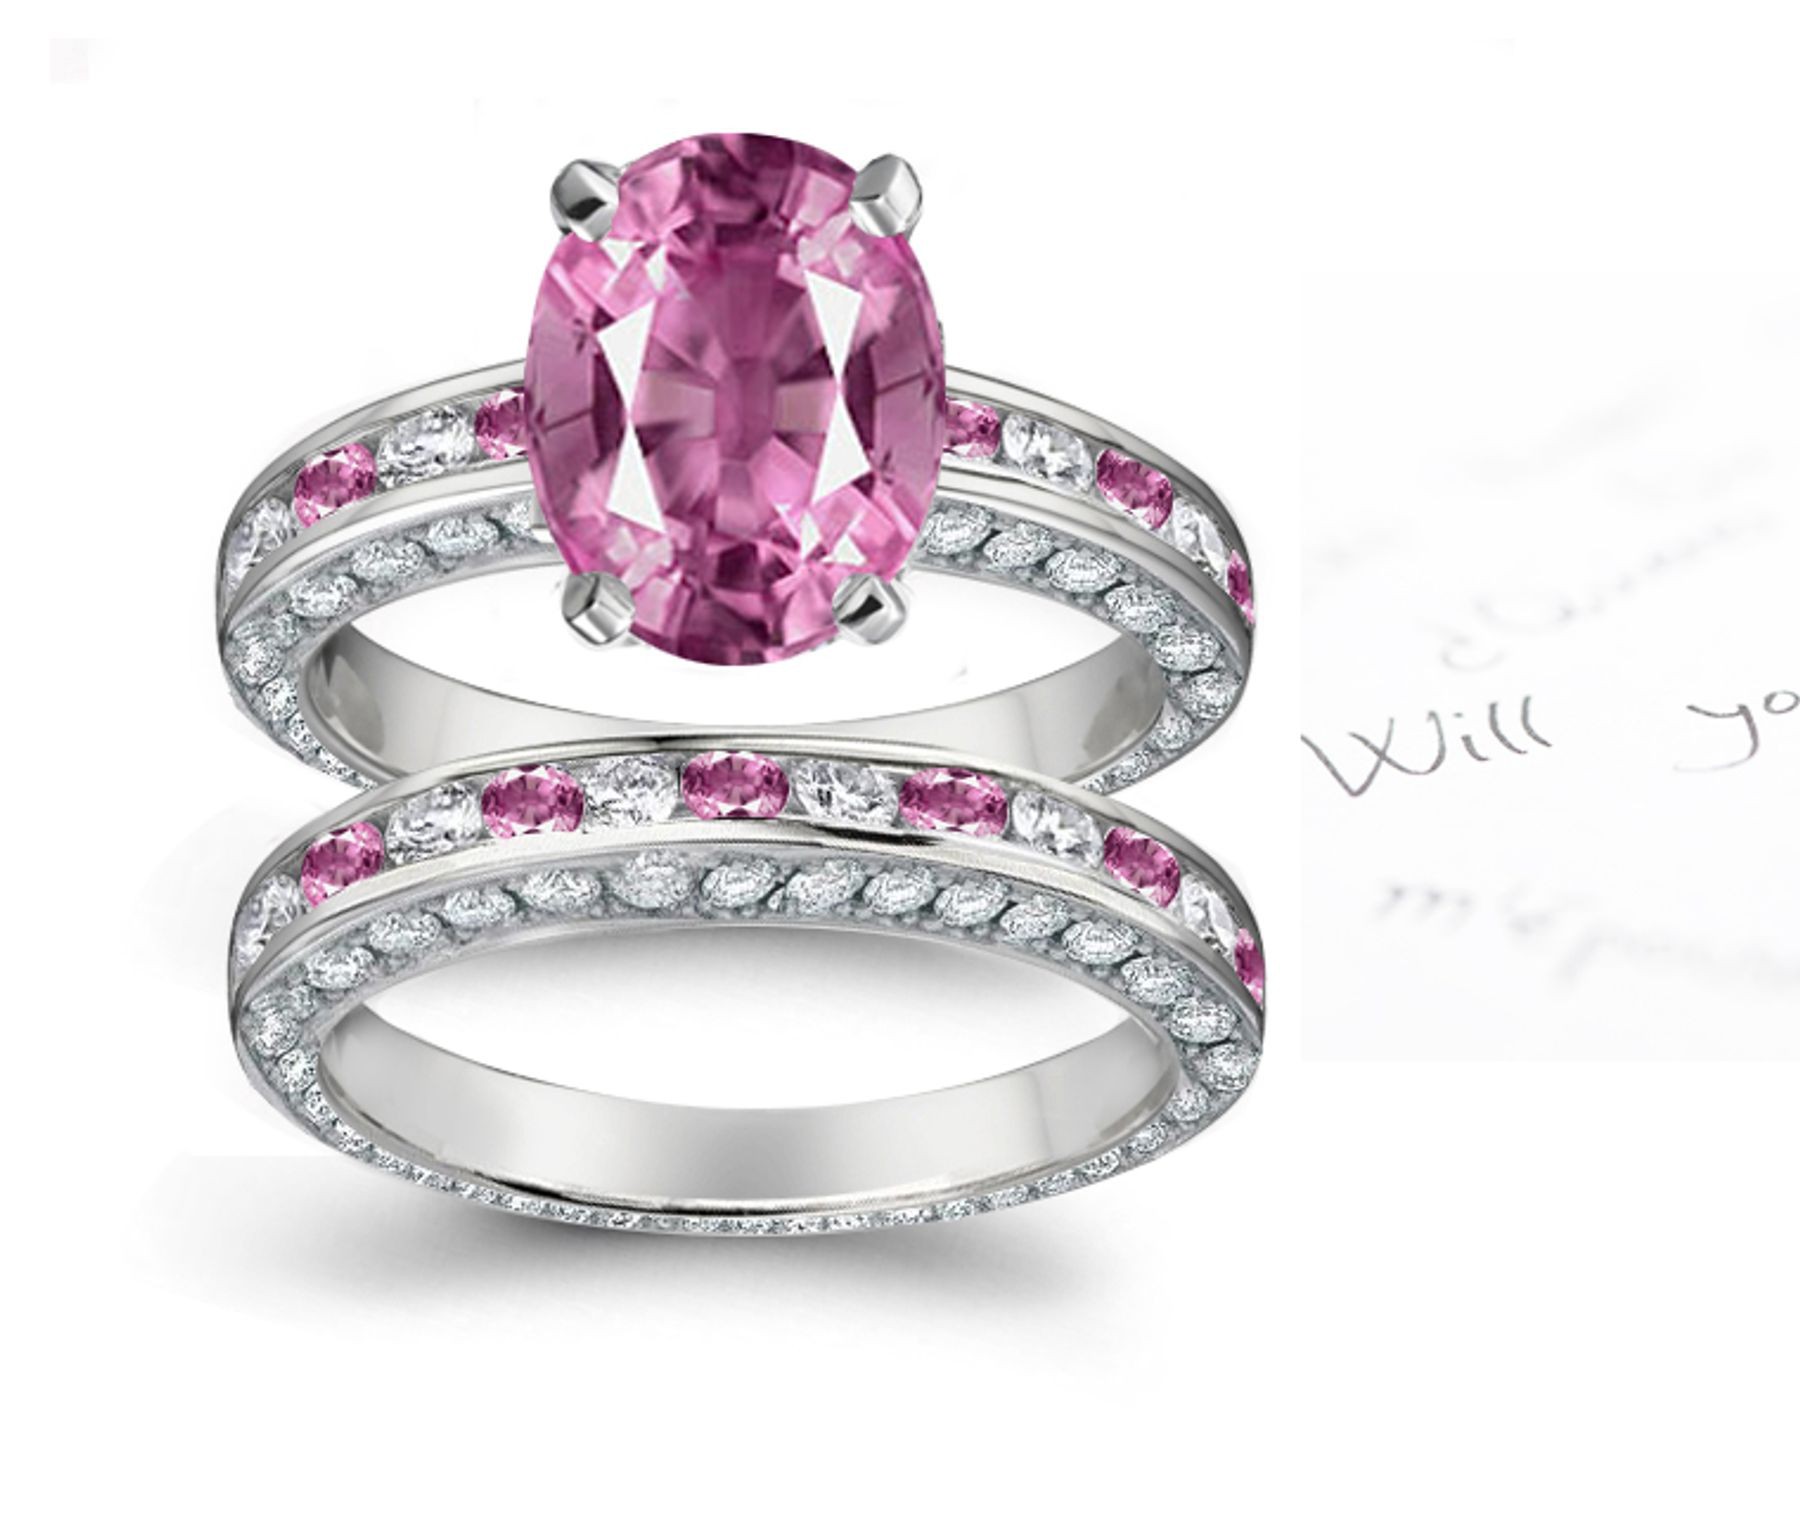 A timeless, design with a deep pink 1.0 carat Splendid Sapphire & halo of well-cut White Diamonds sapphires